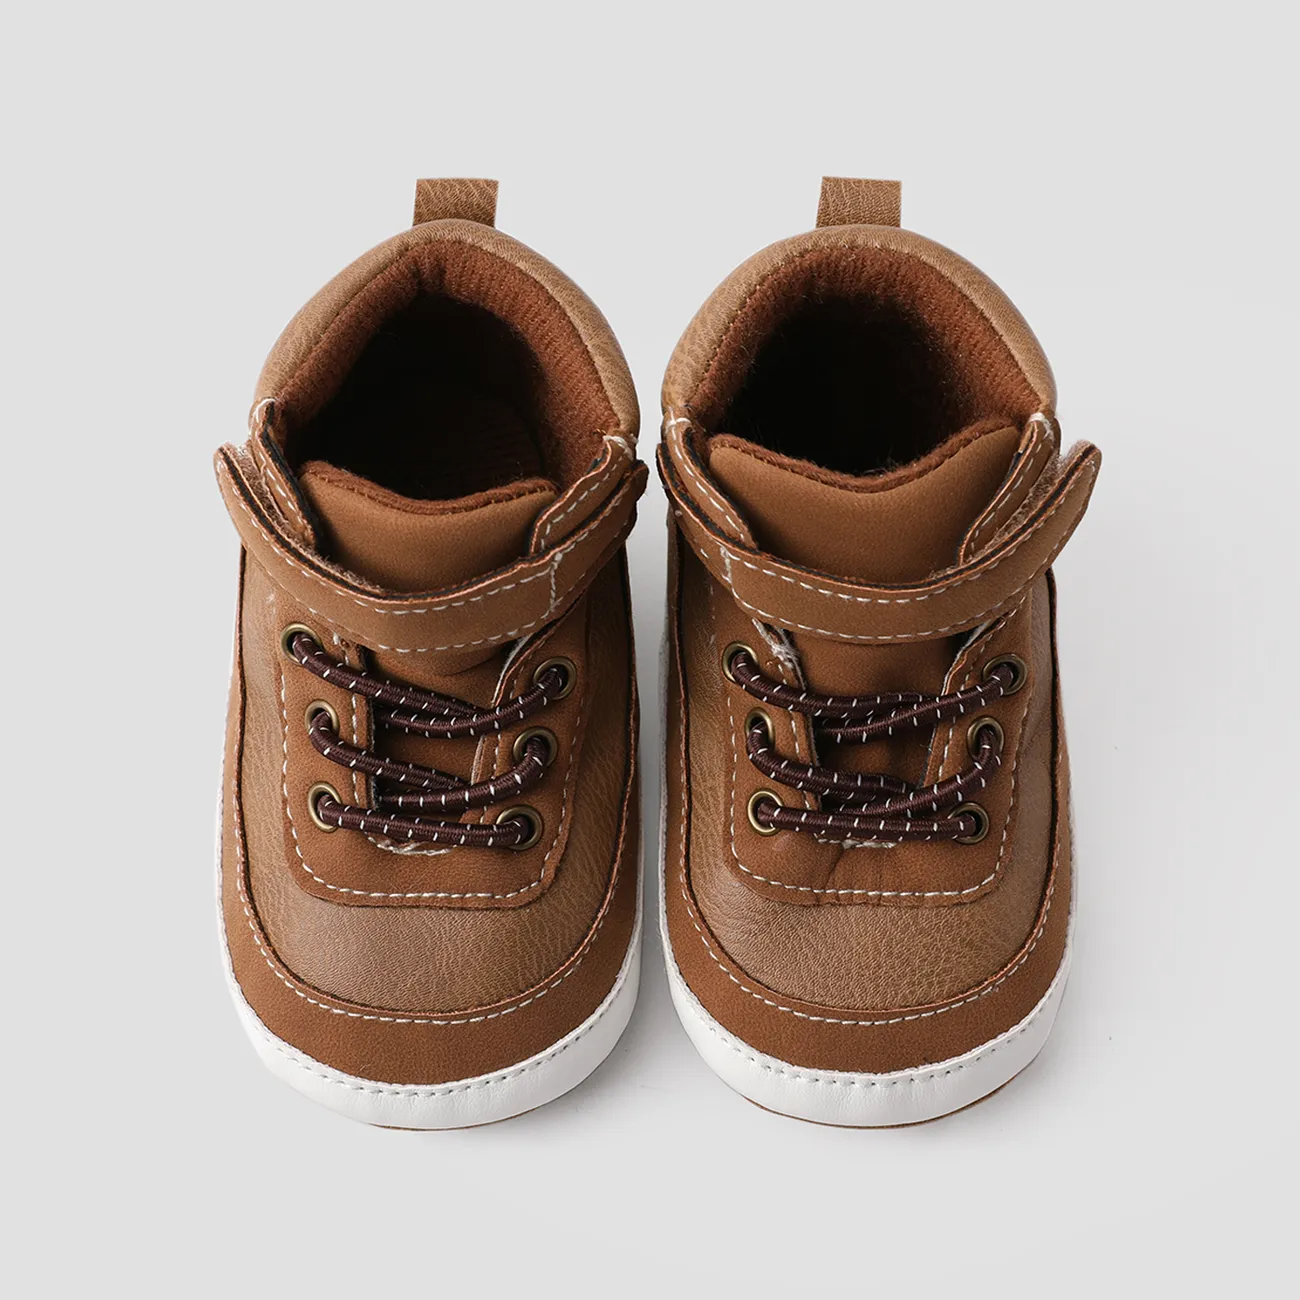 Baby & Toddler Casual Velcro High Top Prewalker Shoes Brown big image 1